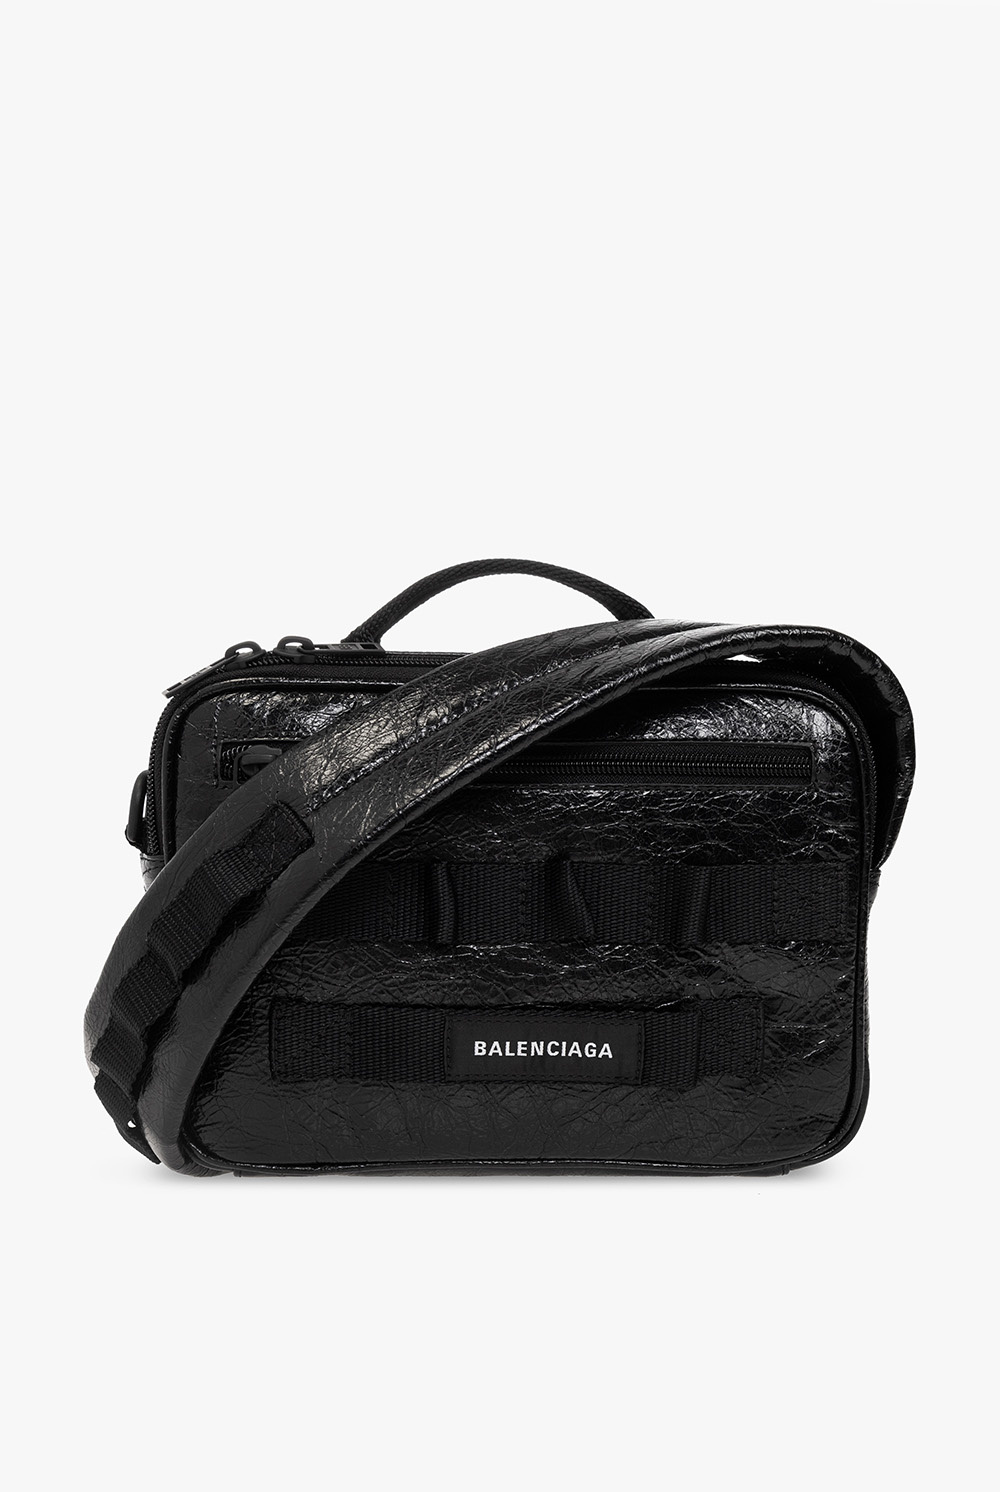 Balenciaga Everyday camera bag Black  STYLISHTOP